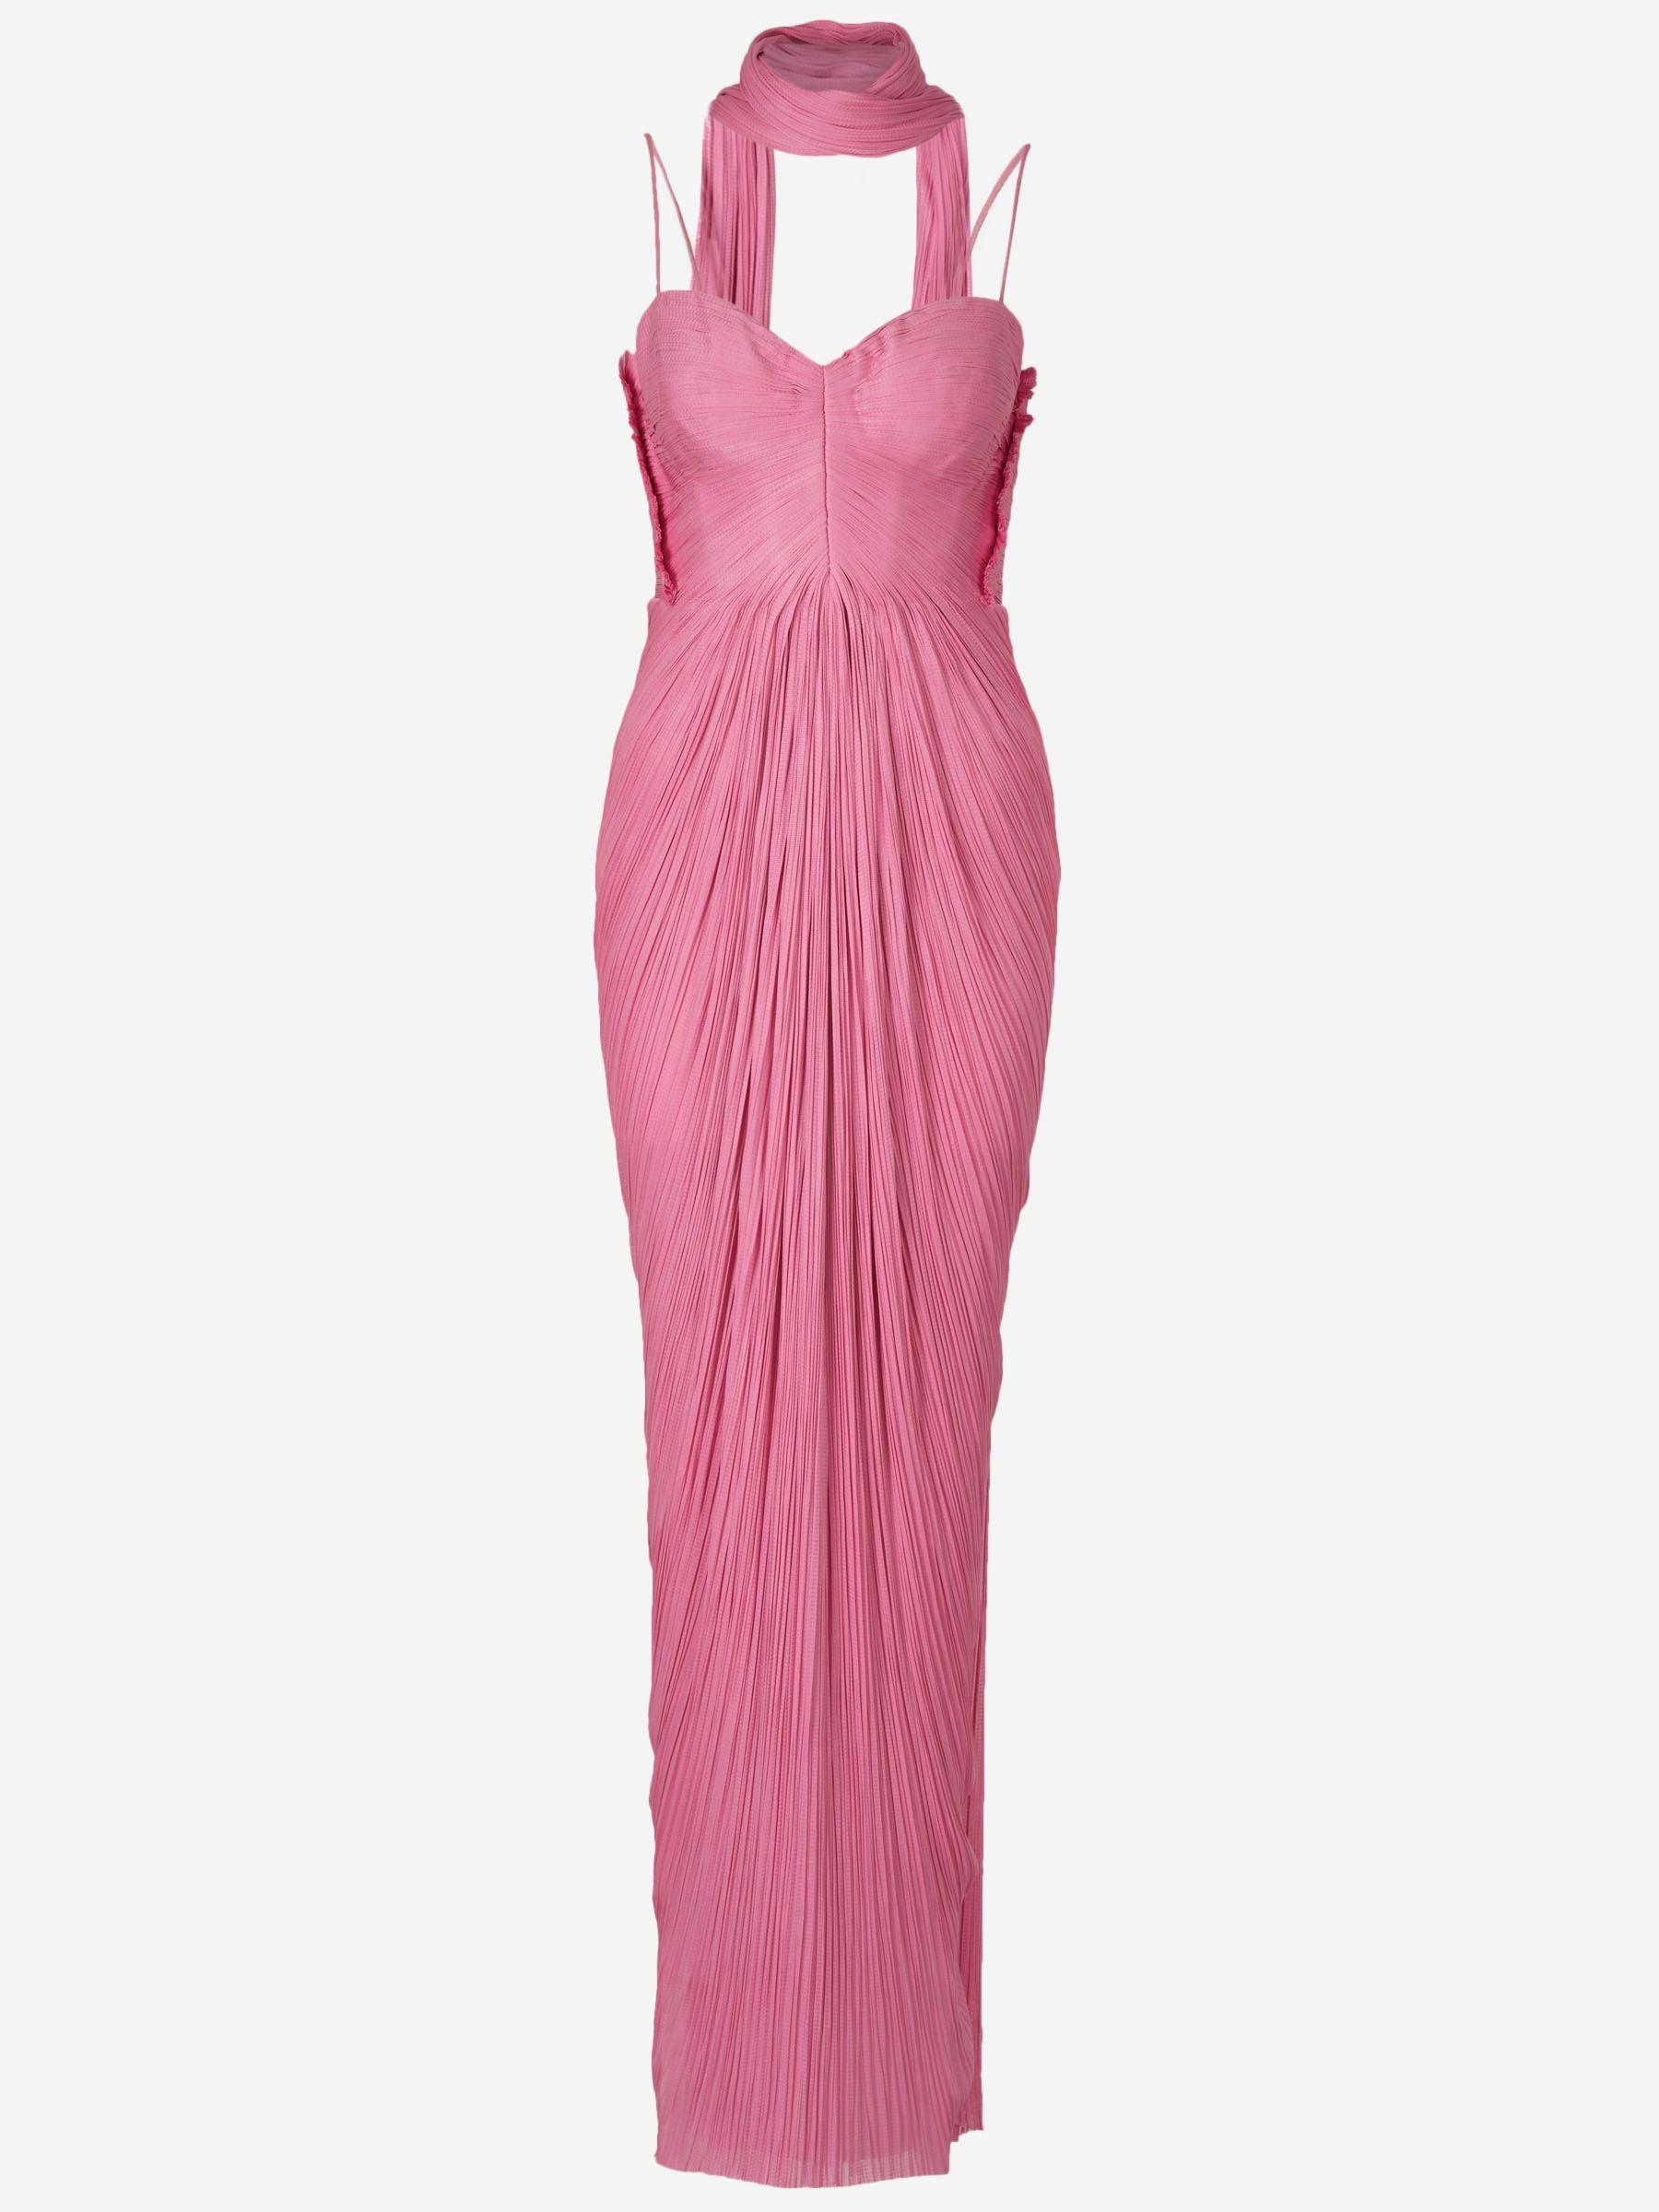 Maria Lucia Hohan Kallie Maxi Dress in Pink | Lyst